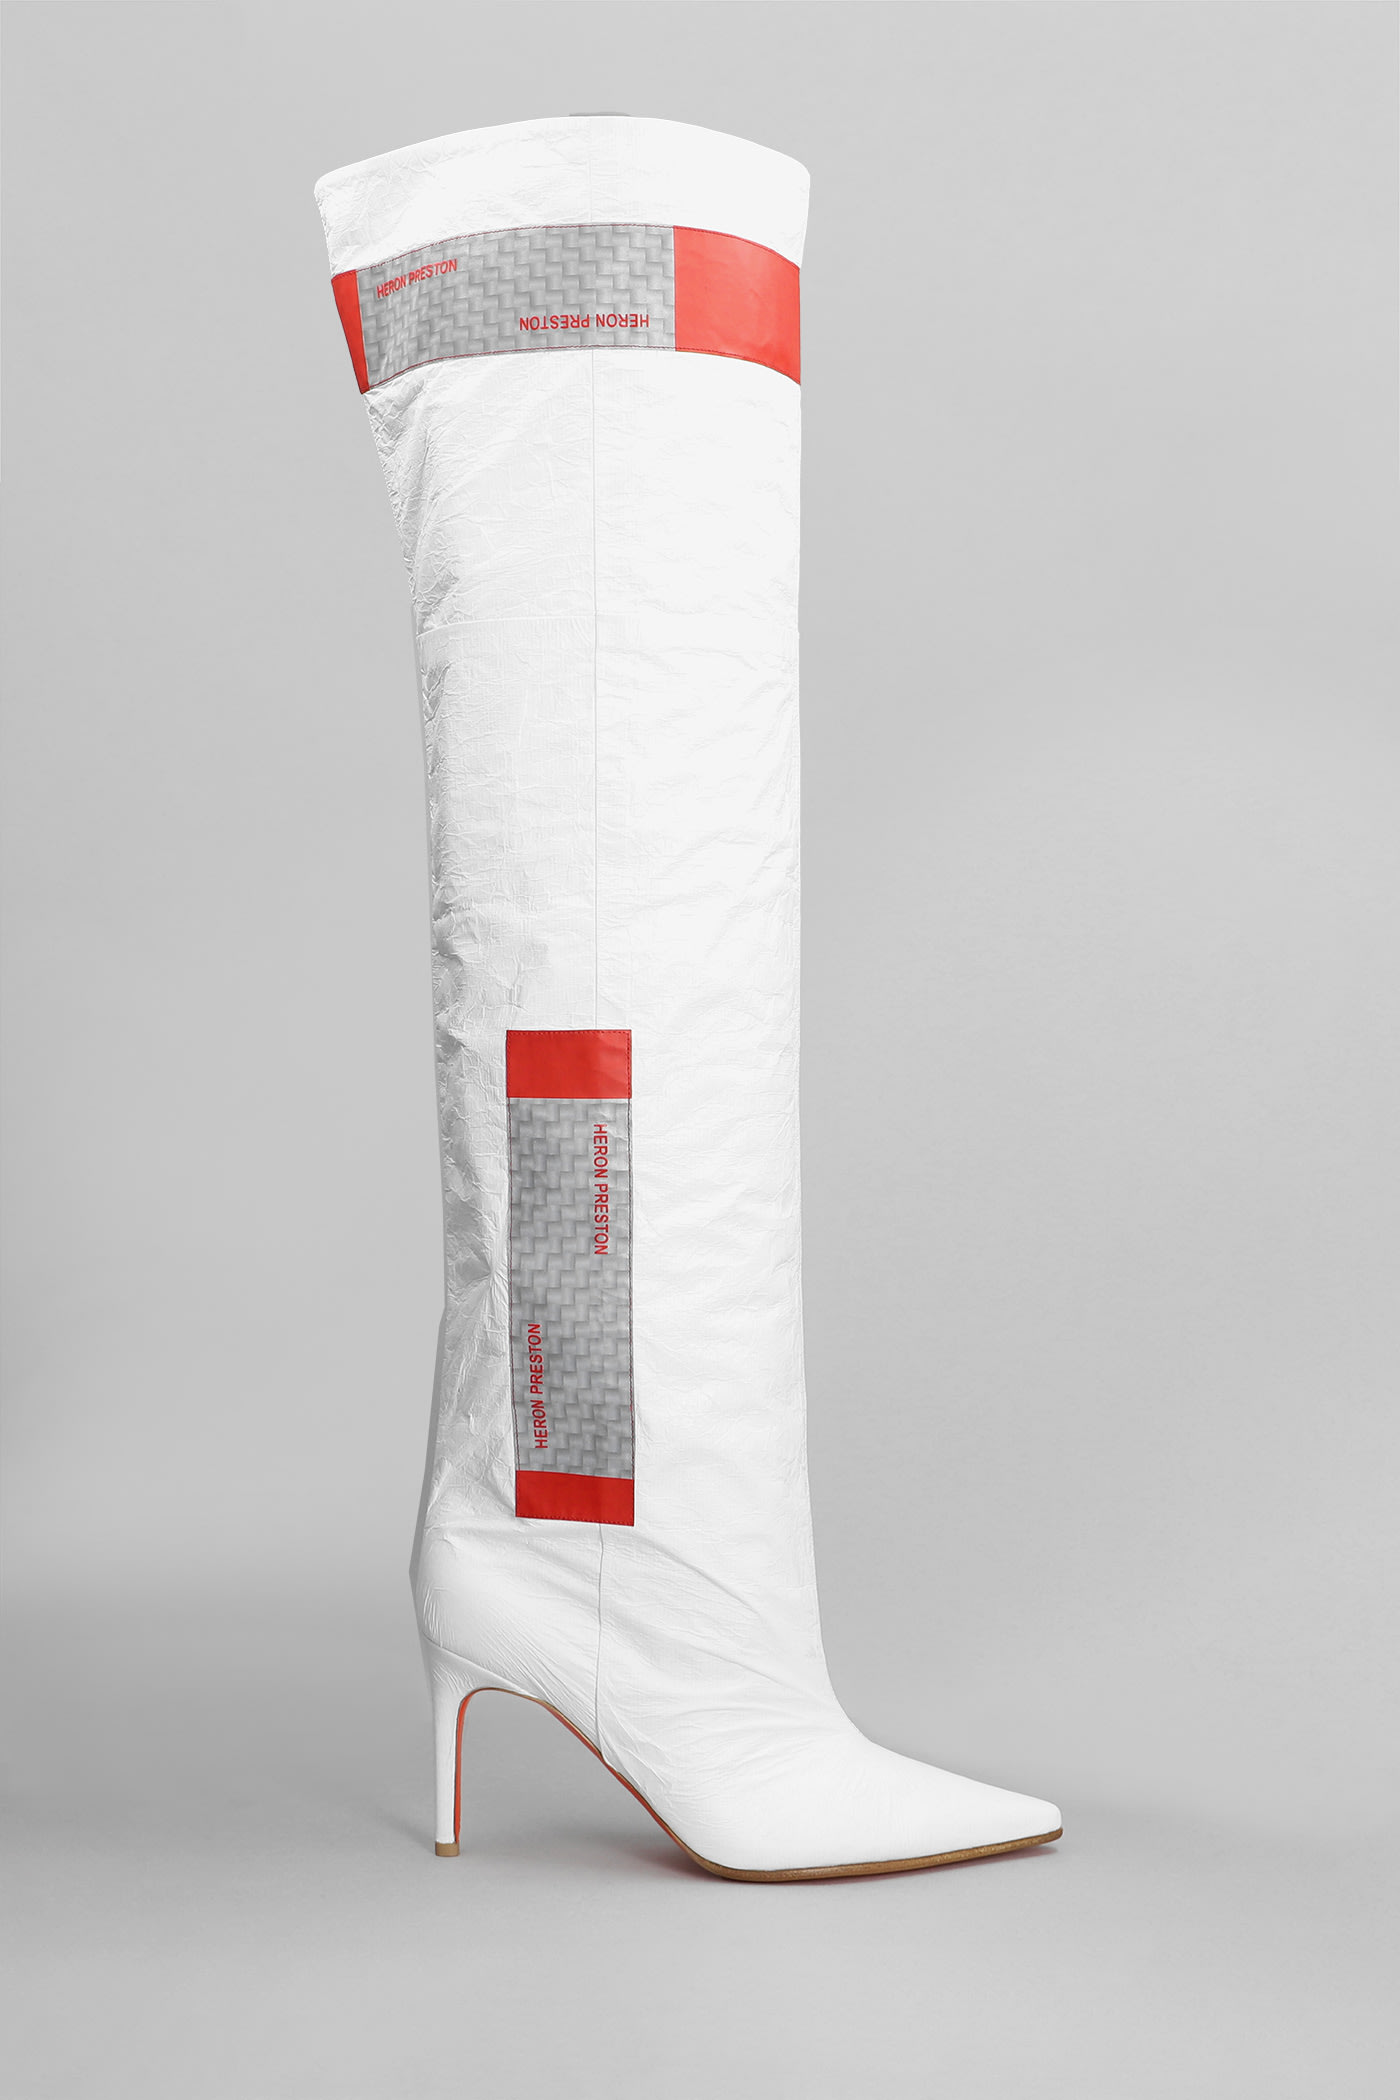 HERON PRESTON High Heels Boots In White Polyester